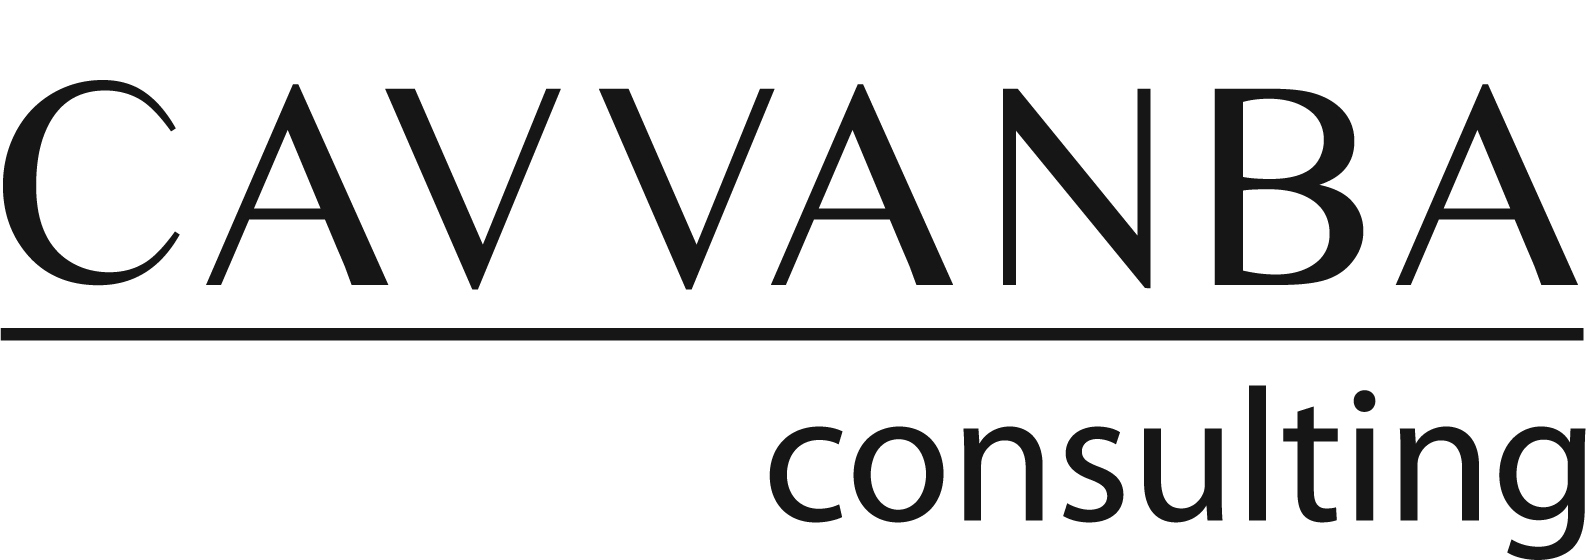 Cavvanba Consulting